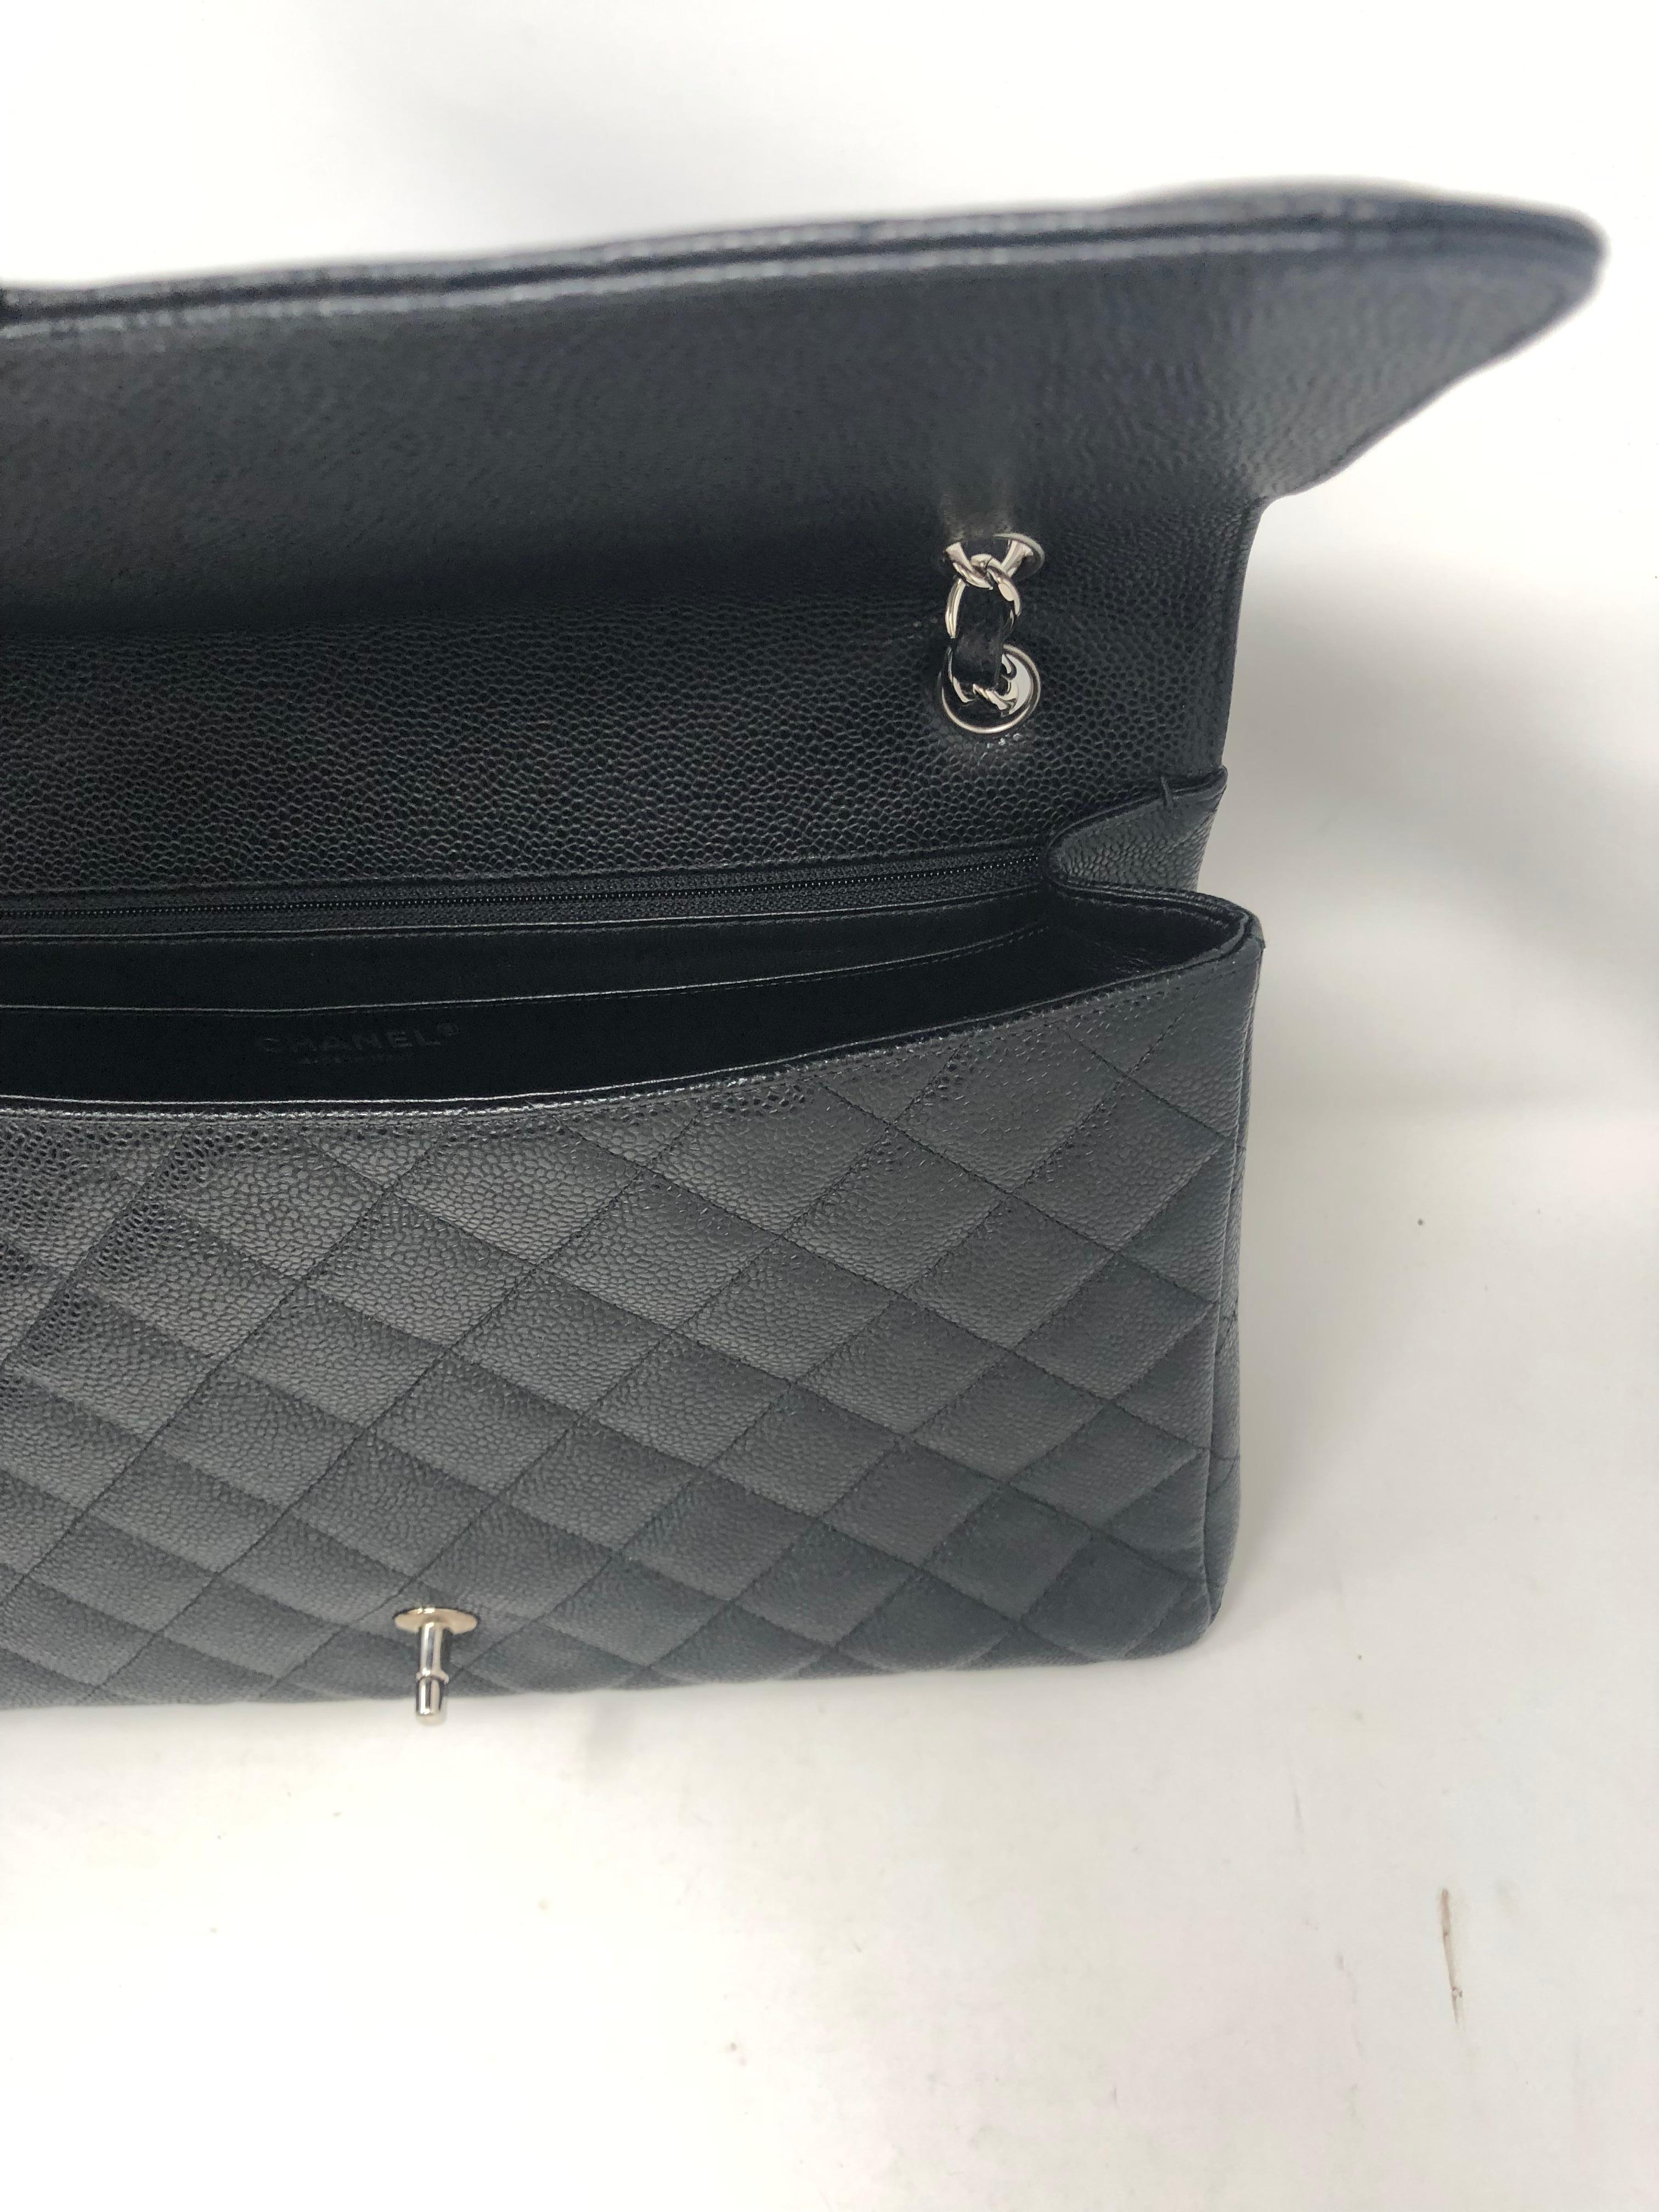 Chanel Black Caviar Leather Maxi Bag 3